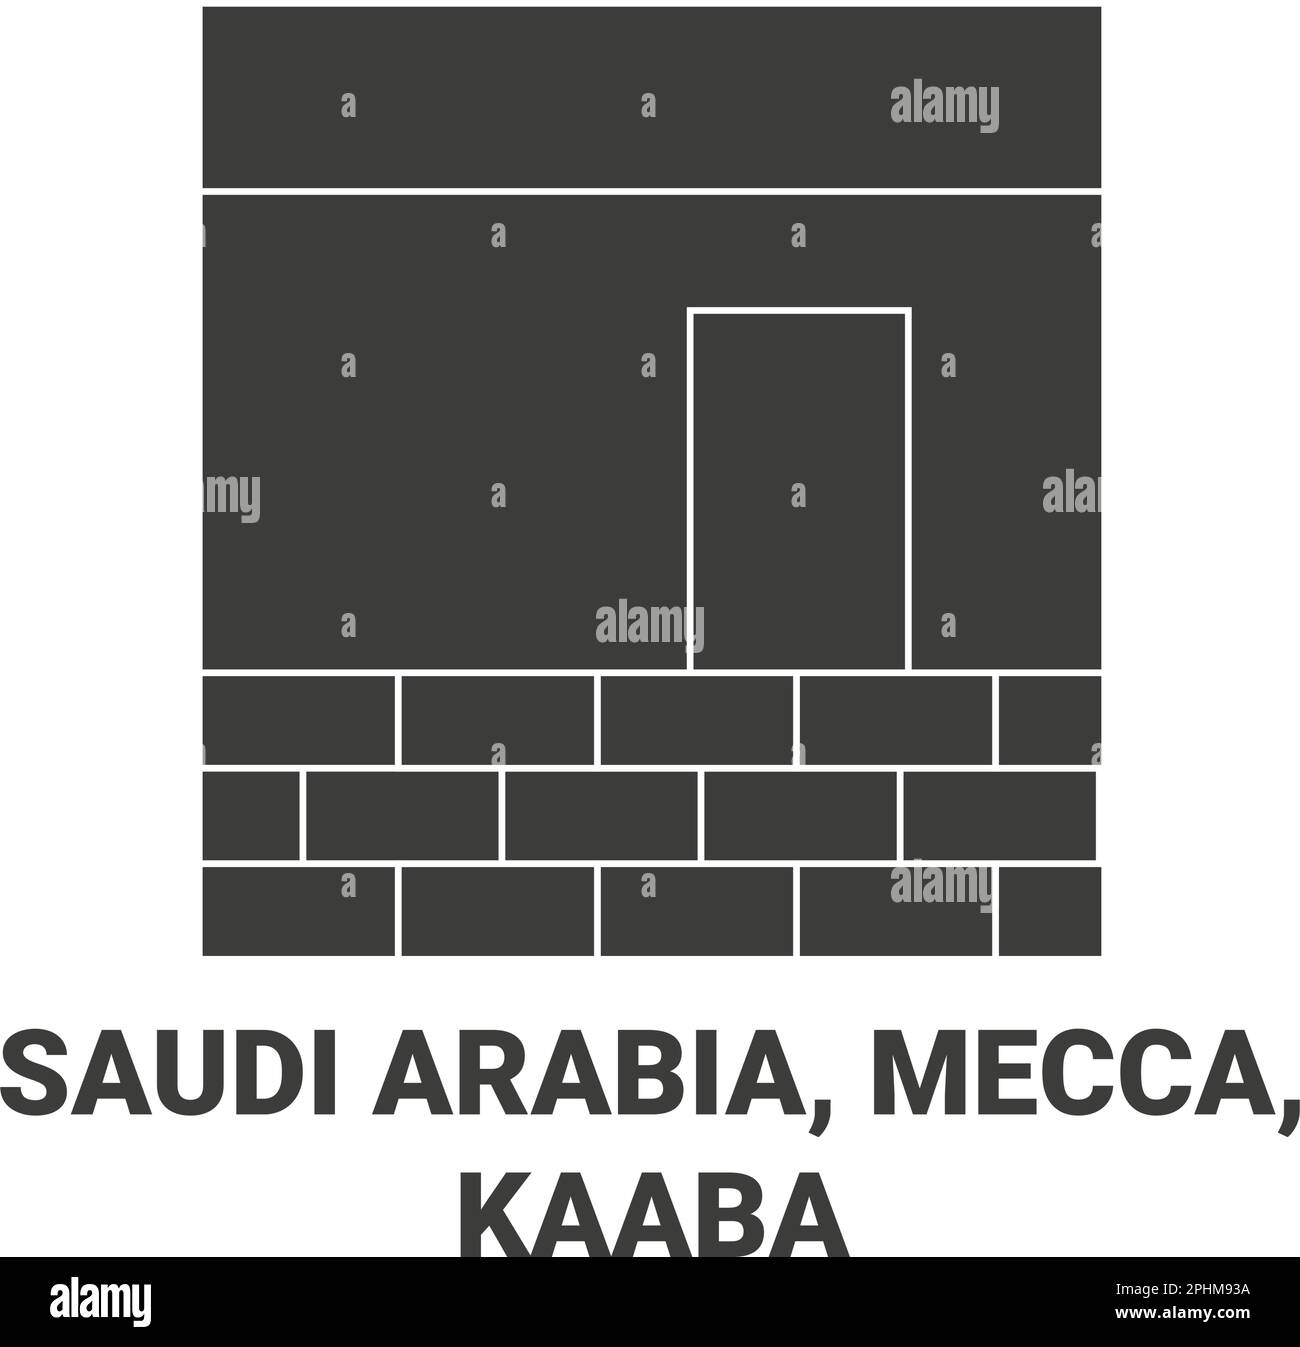 Saudi Arabia, Mecca, Kaaba travel landmark vector illustration Stock Vector